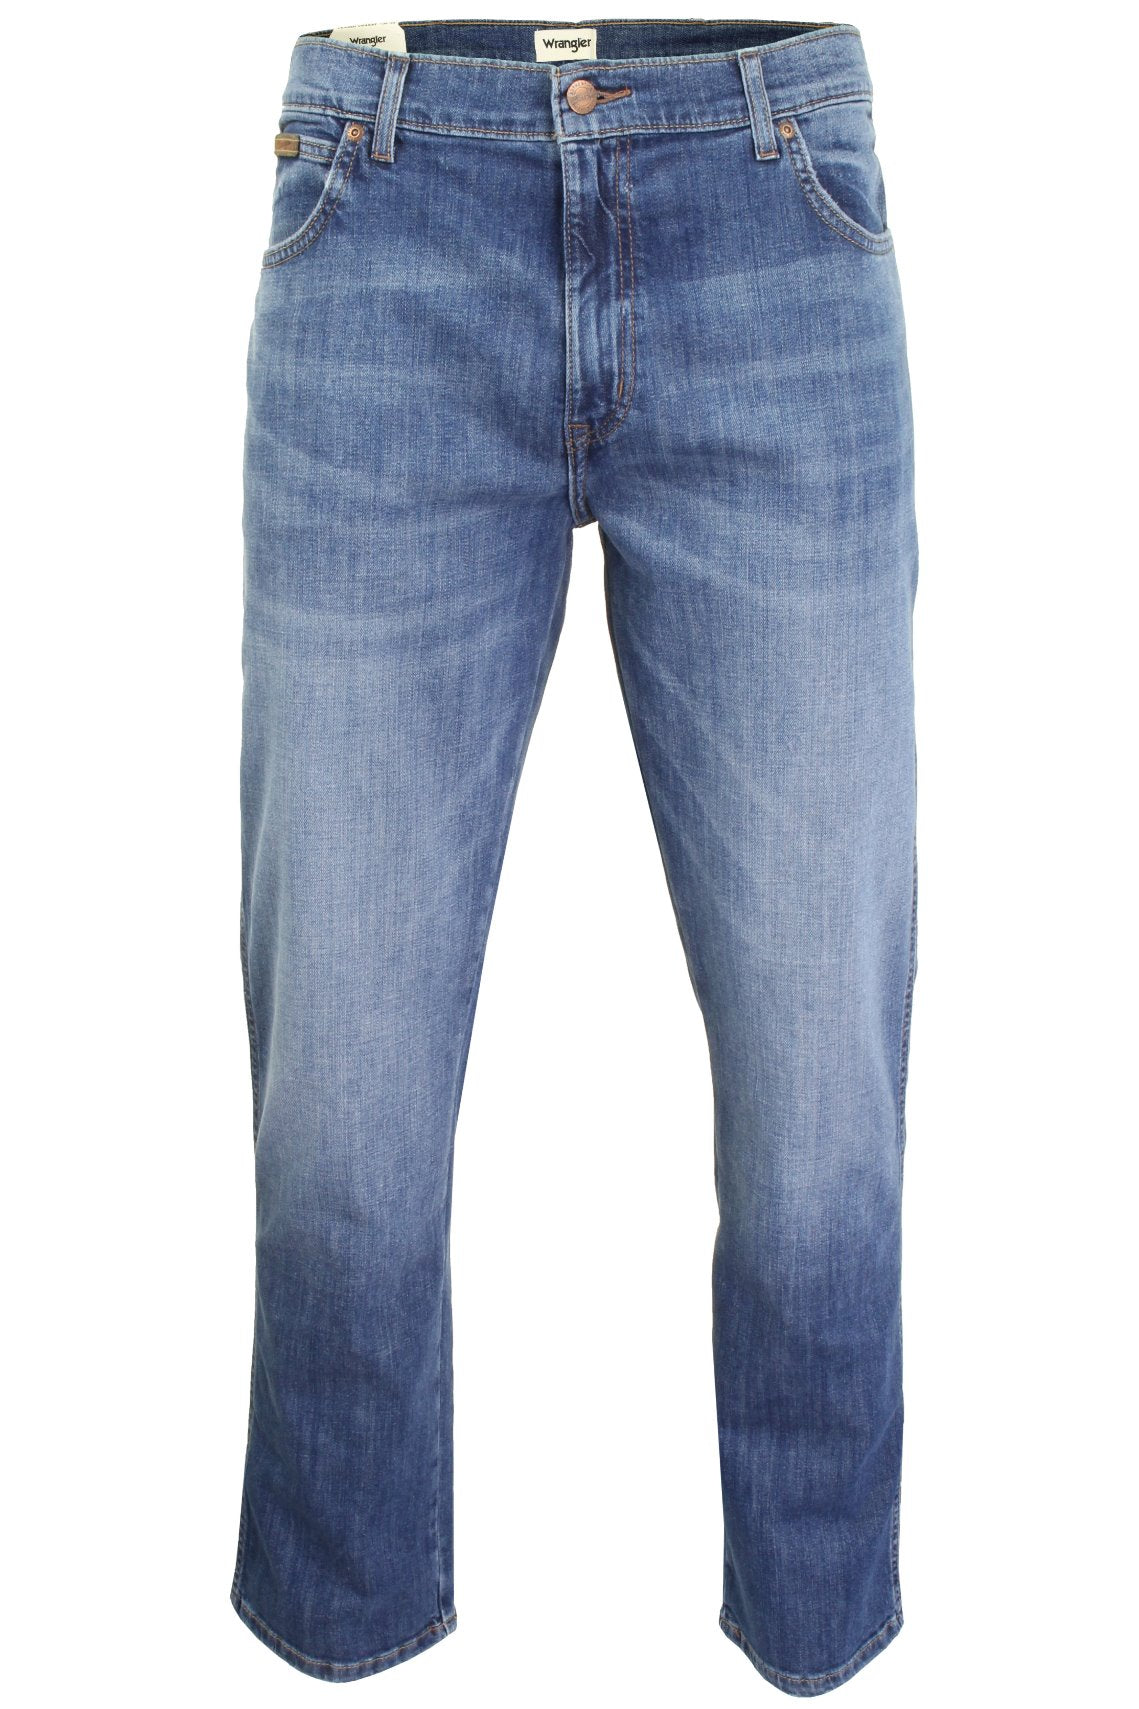 Mens Wrangler 'Texas' Jeans - Denim Stretch - Original Straight Fit, 01, W121-Core, Blue Jay